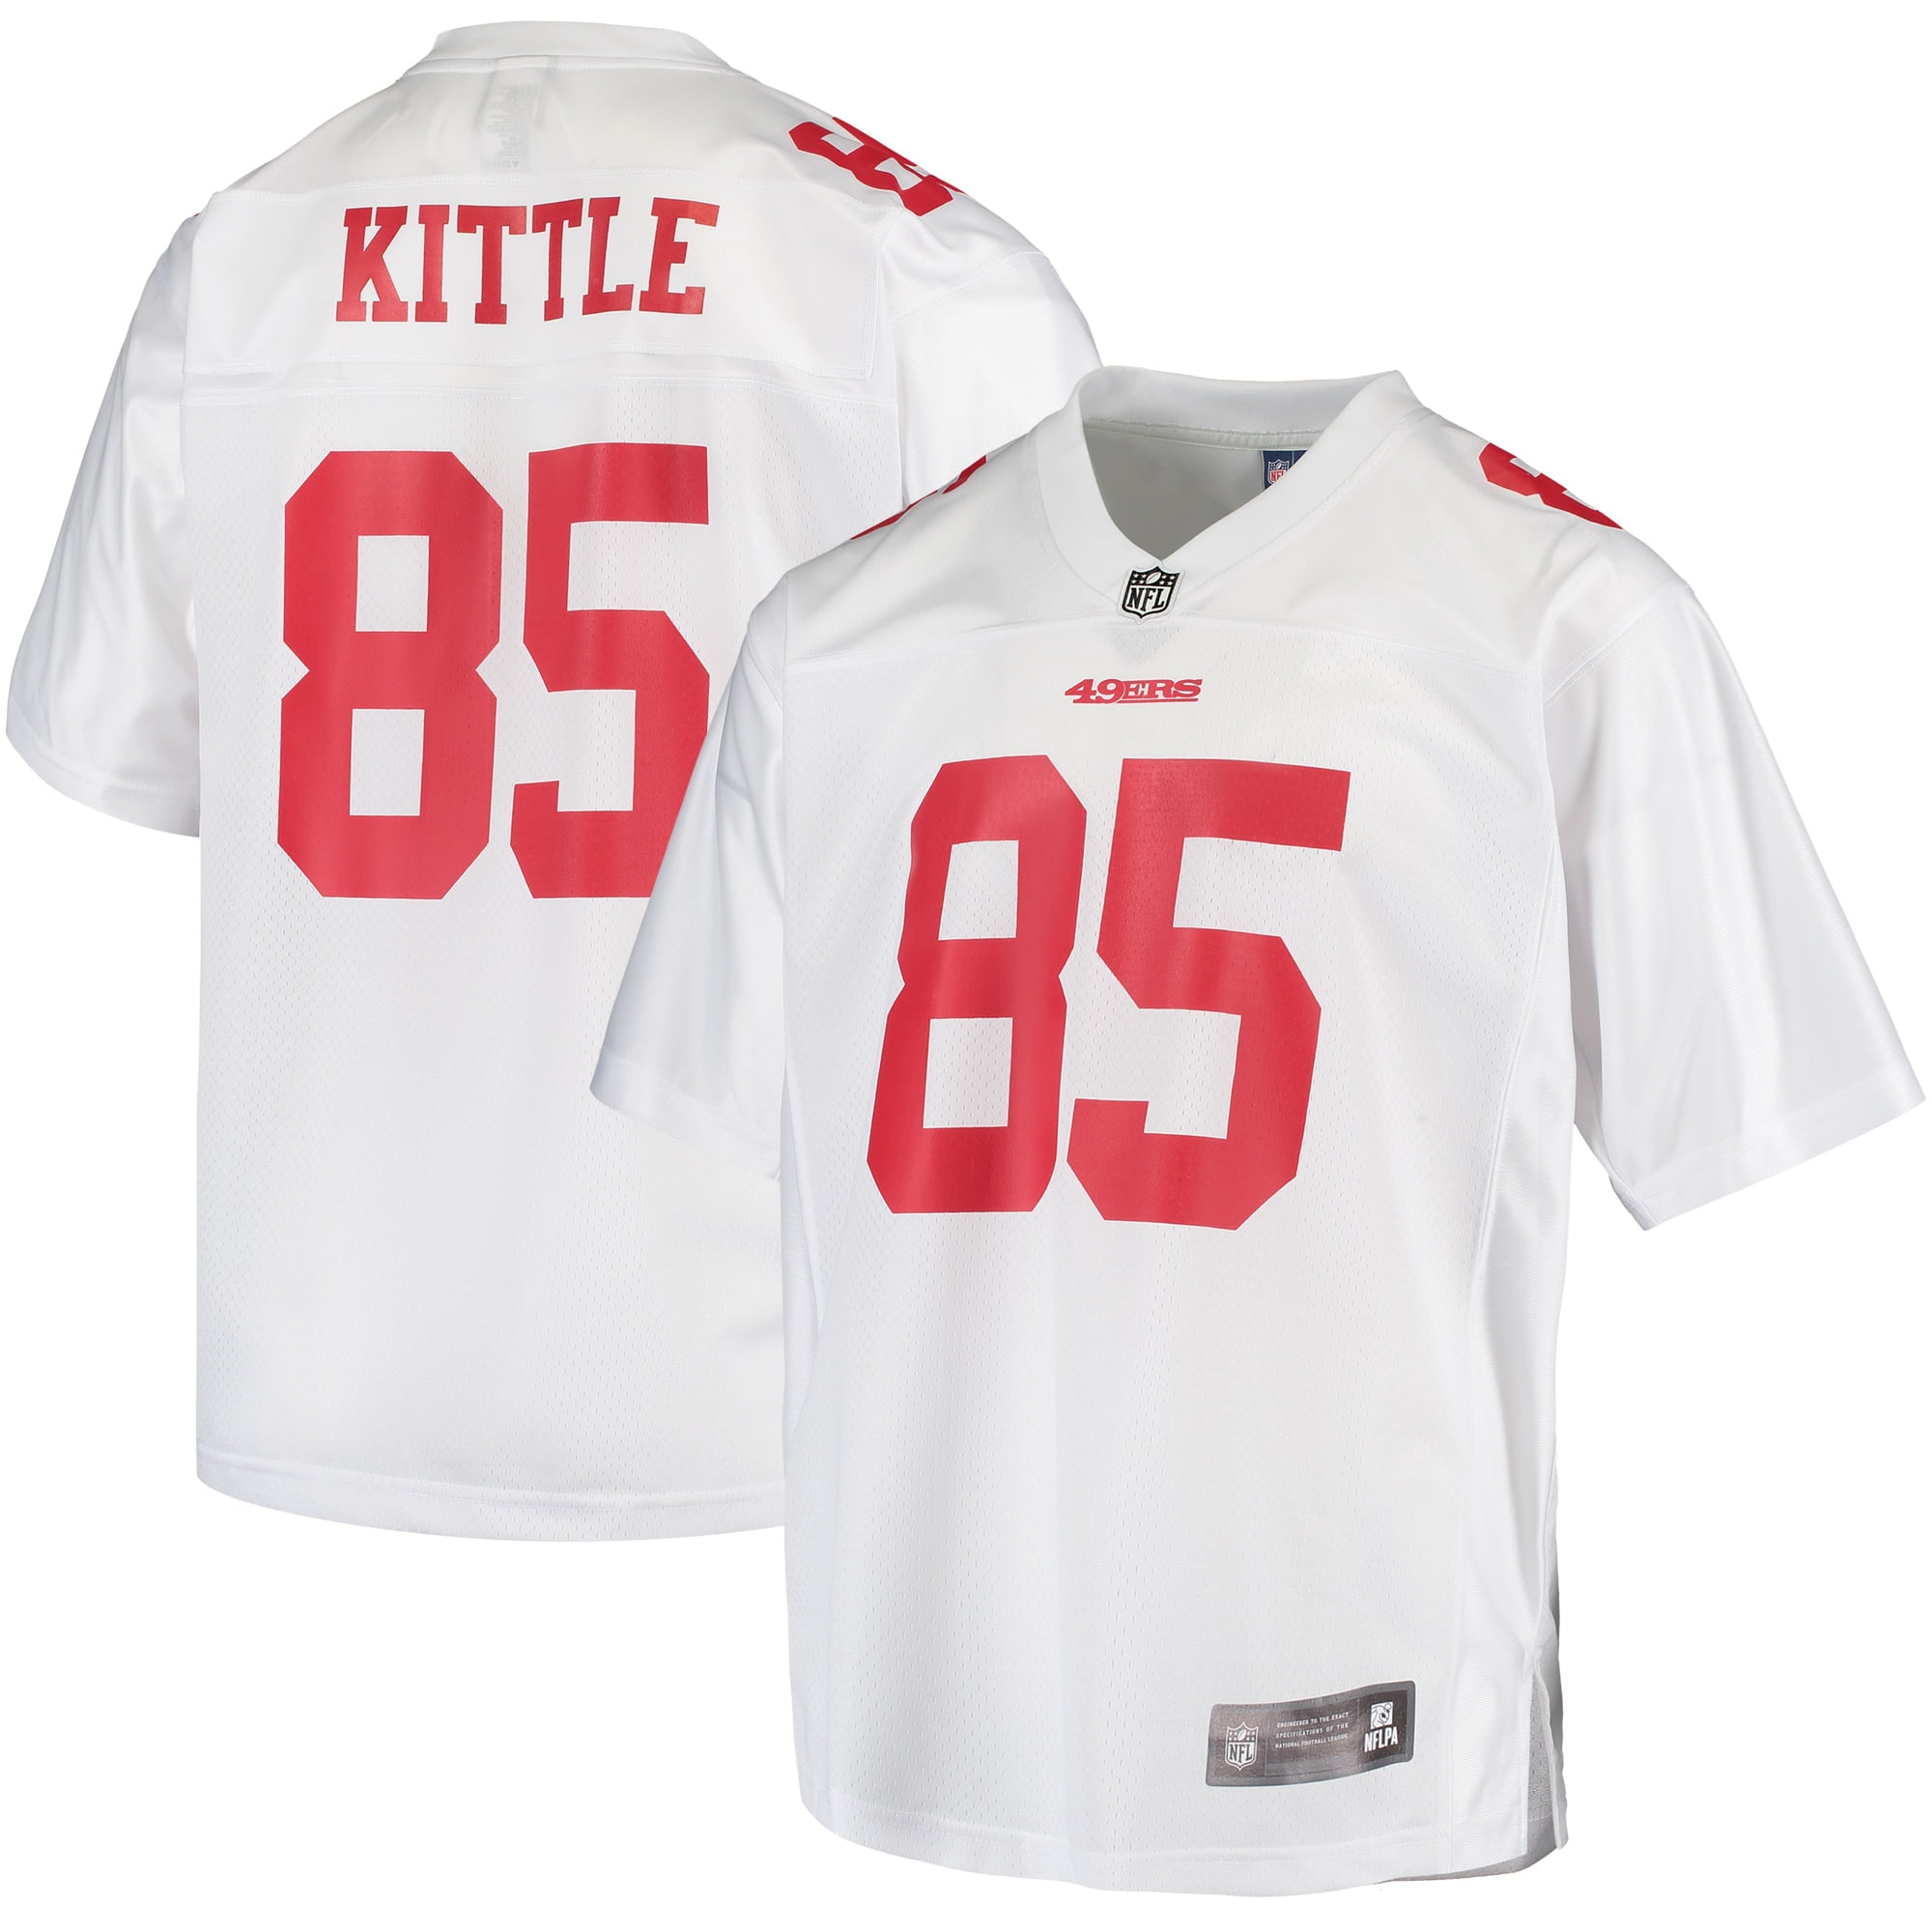 kittle jersey white